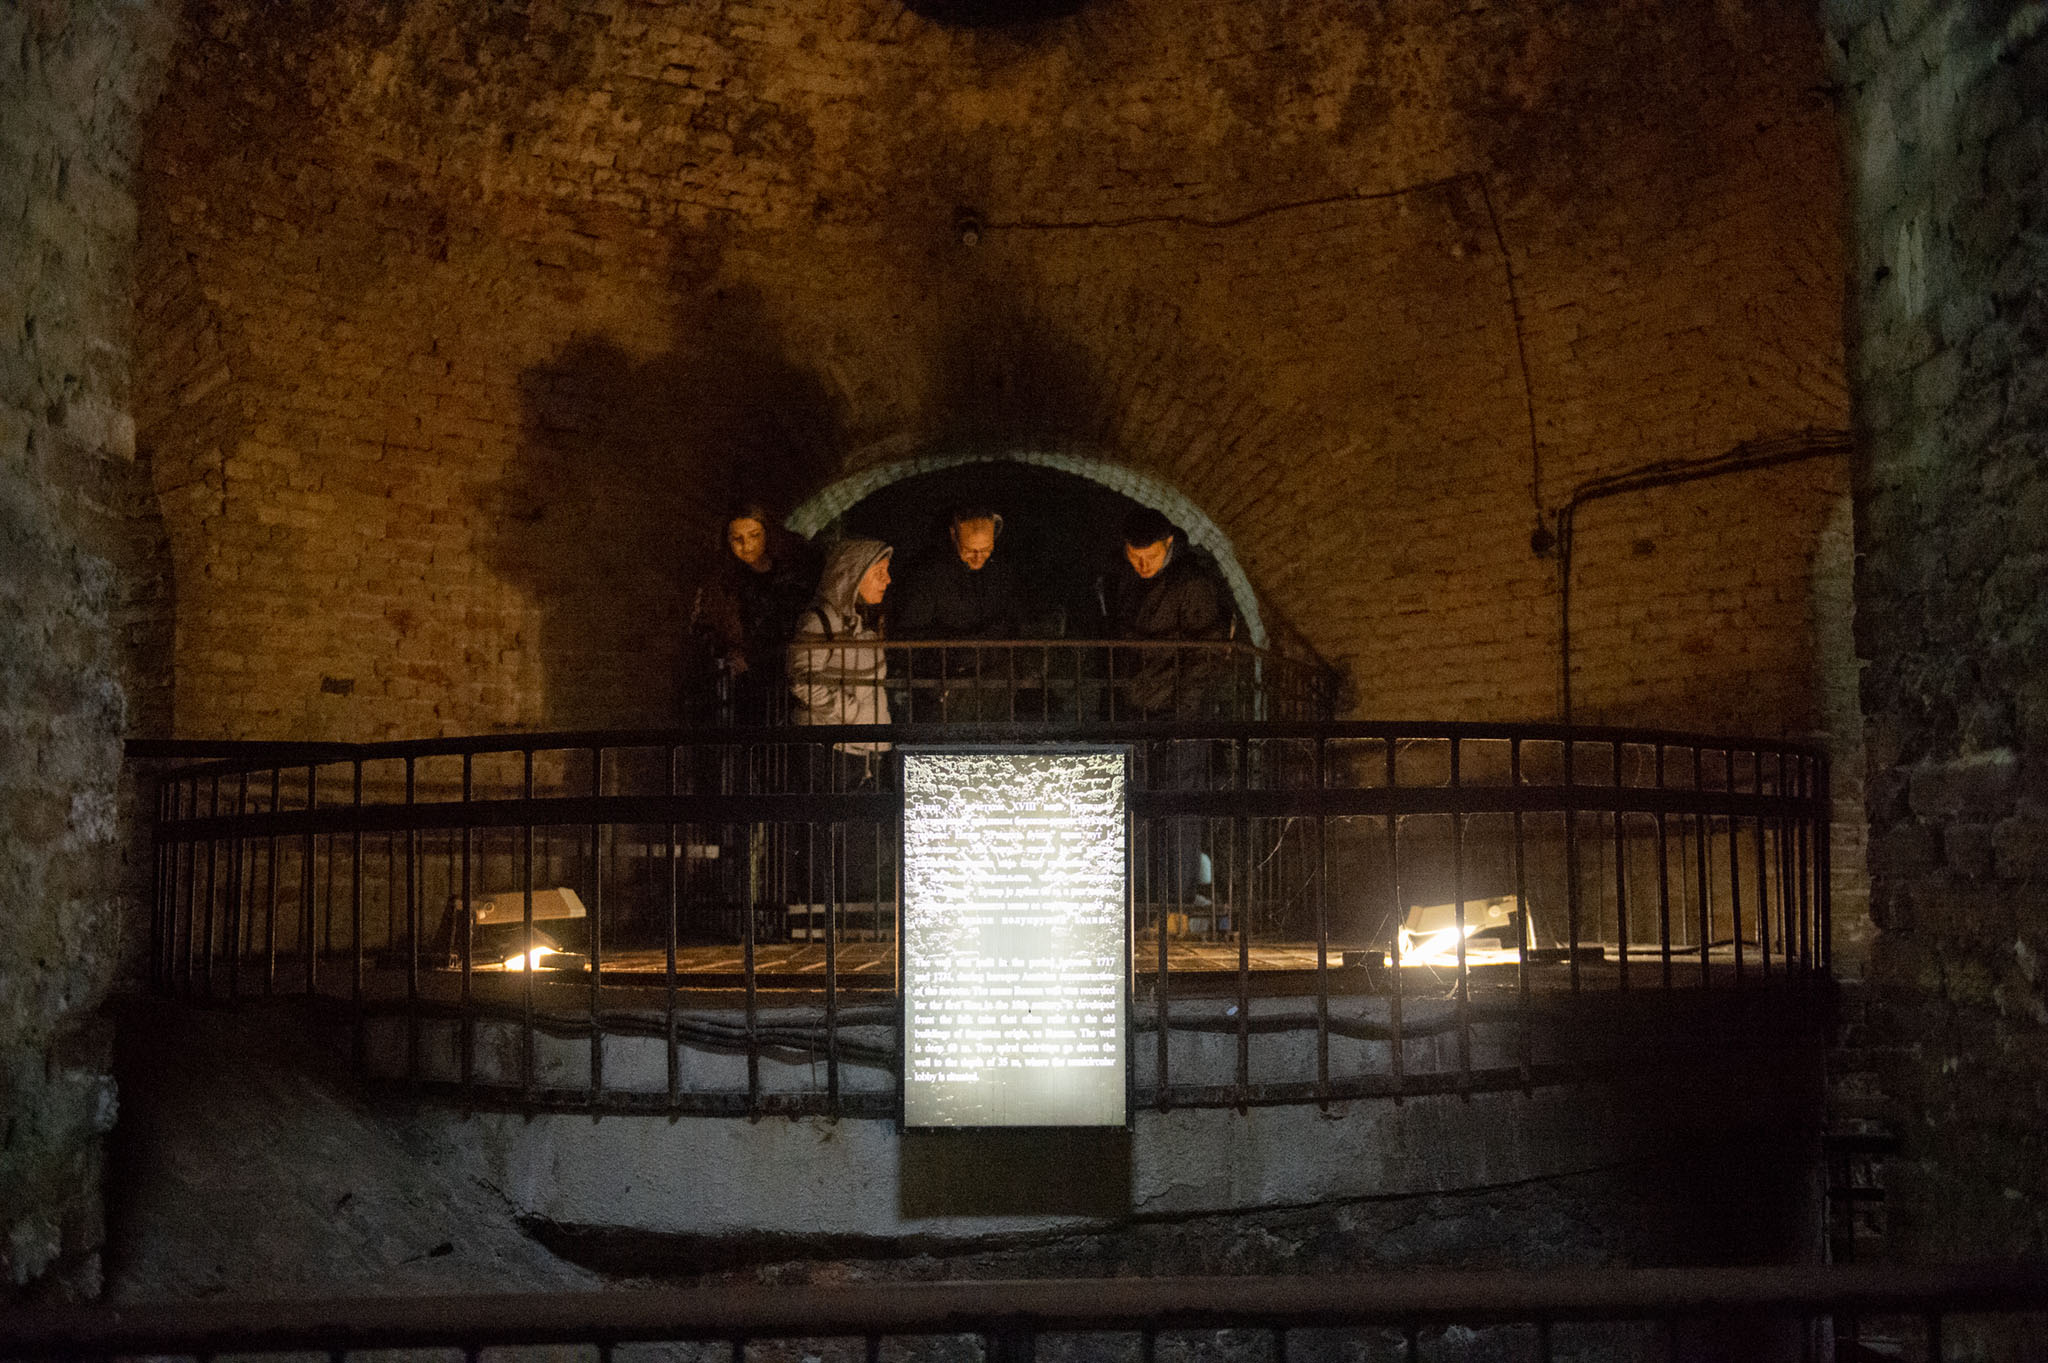 Rimski bunar, Beograd ispod Beograda